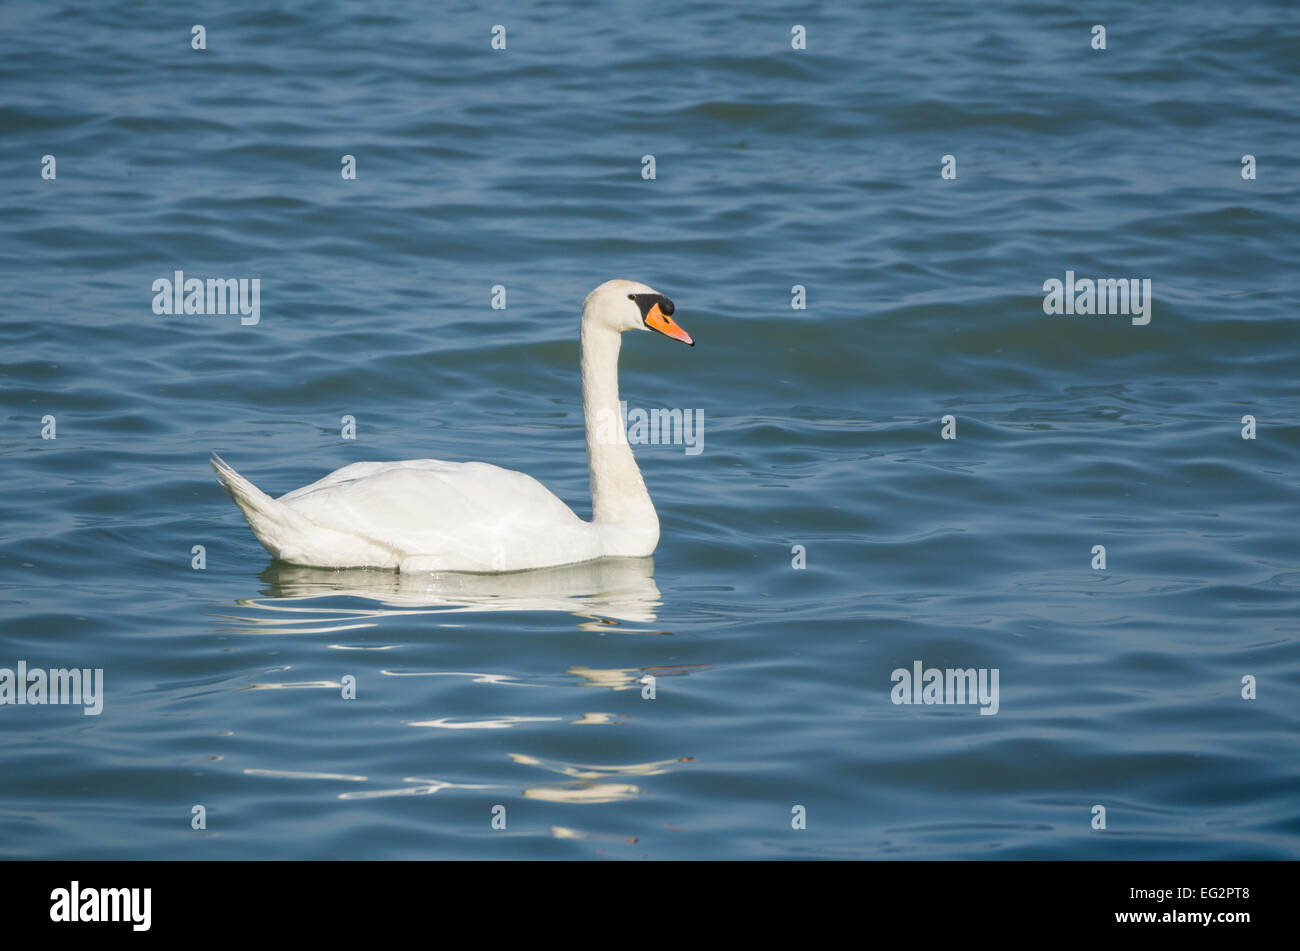 Mute Swan Swimming on the Blue Wavy Lake Stock Photo